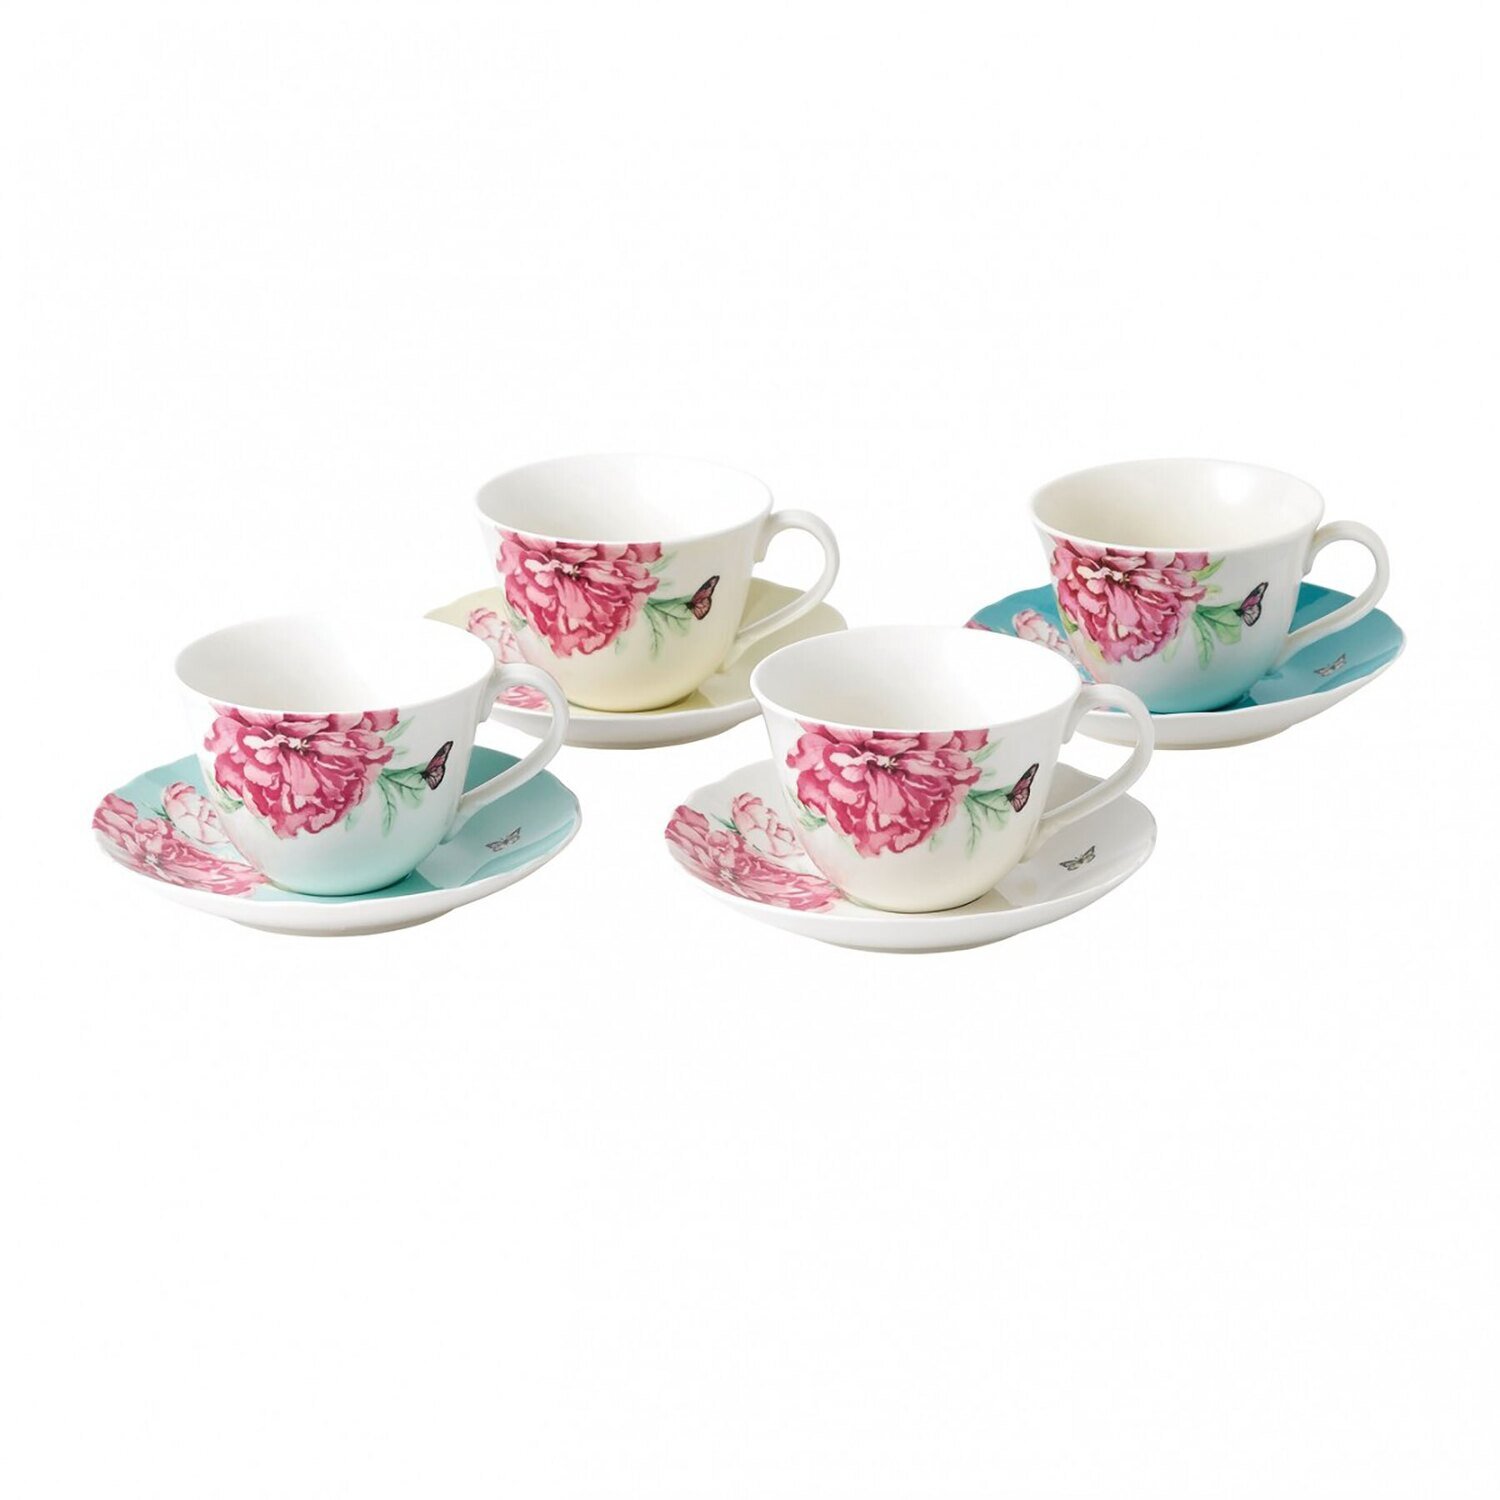 Royal Albert Everyday Friendship Teacup & Saucer Set of 4 Mixed Colors